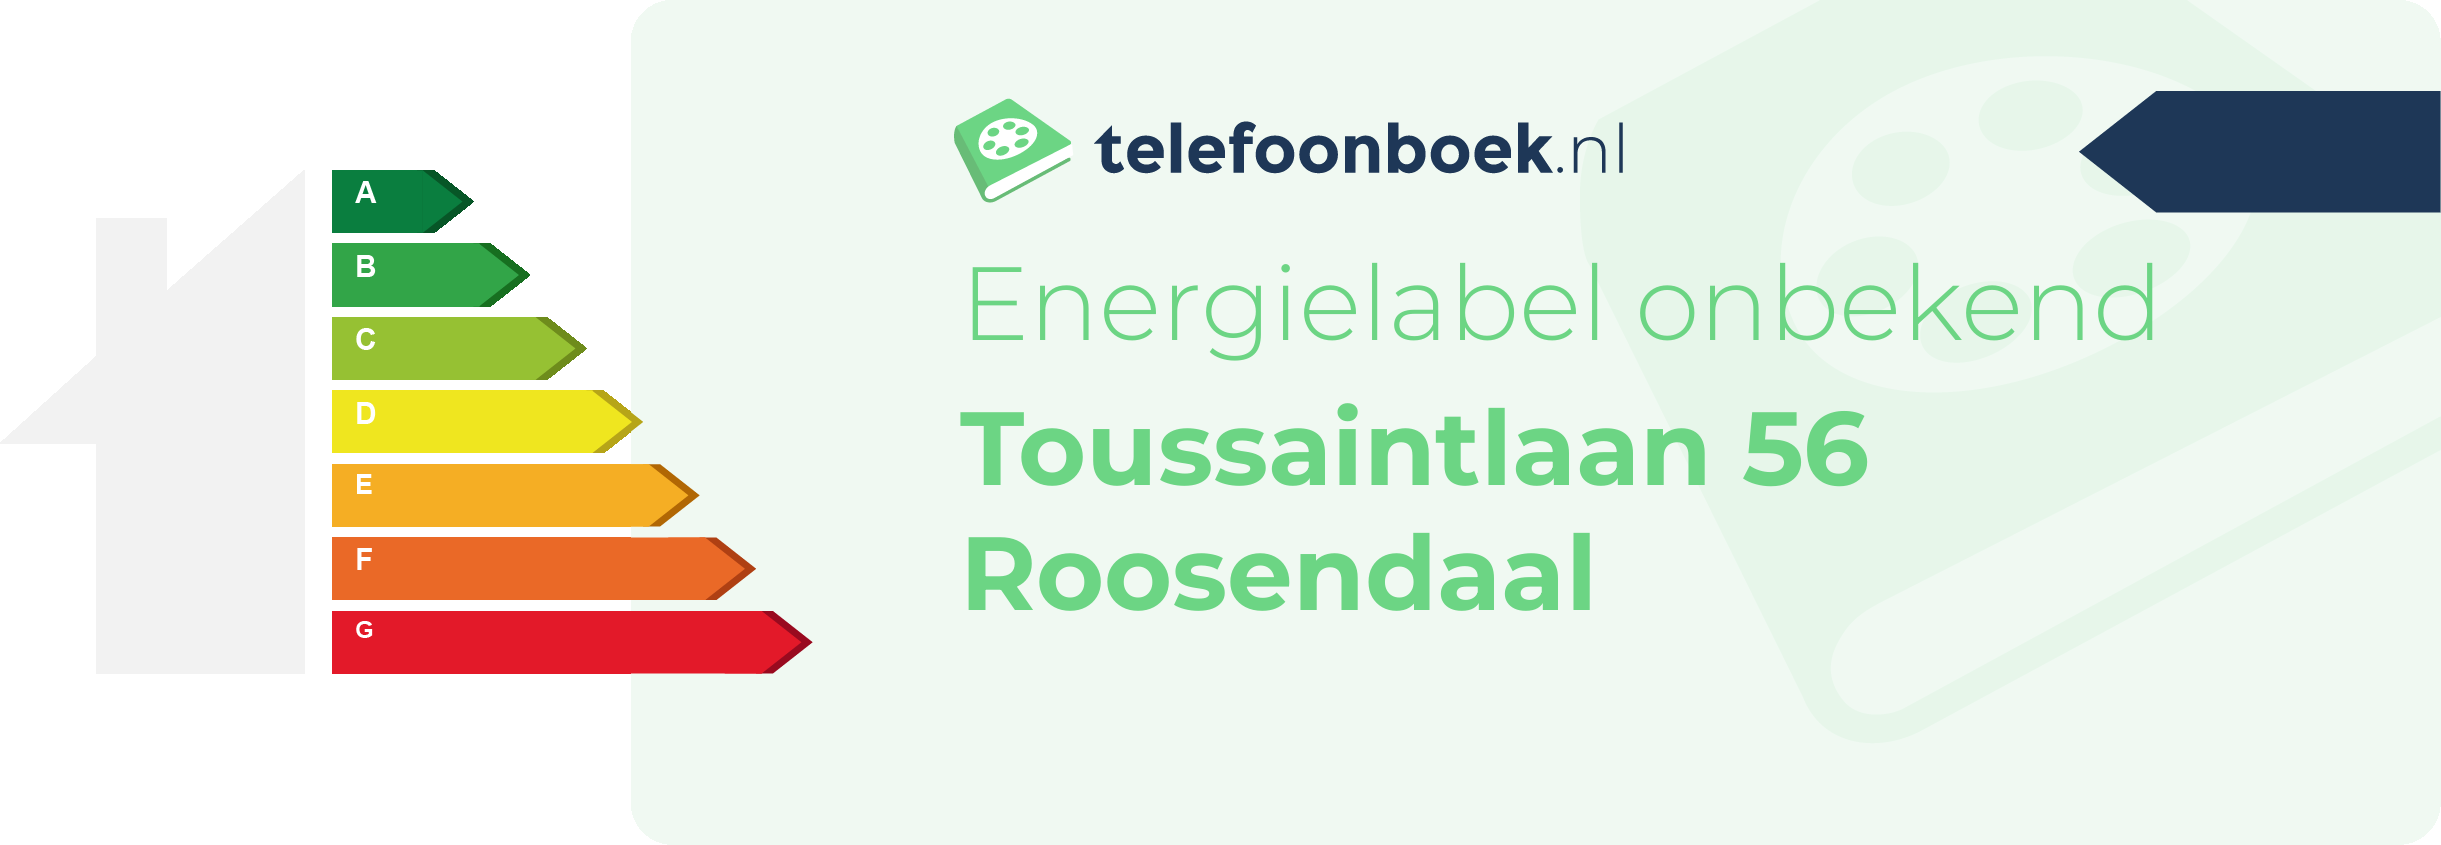 Energielabel Toussaintlaan 56 Roosendaal